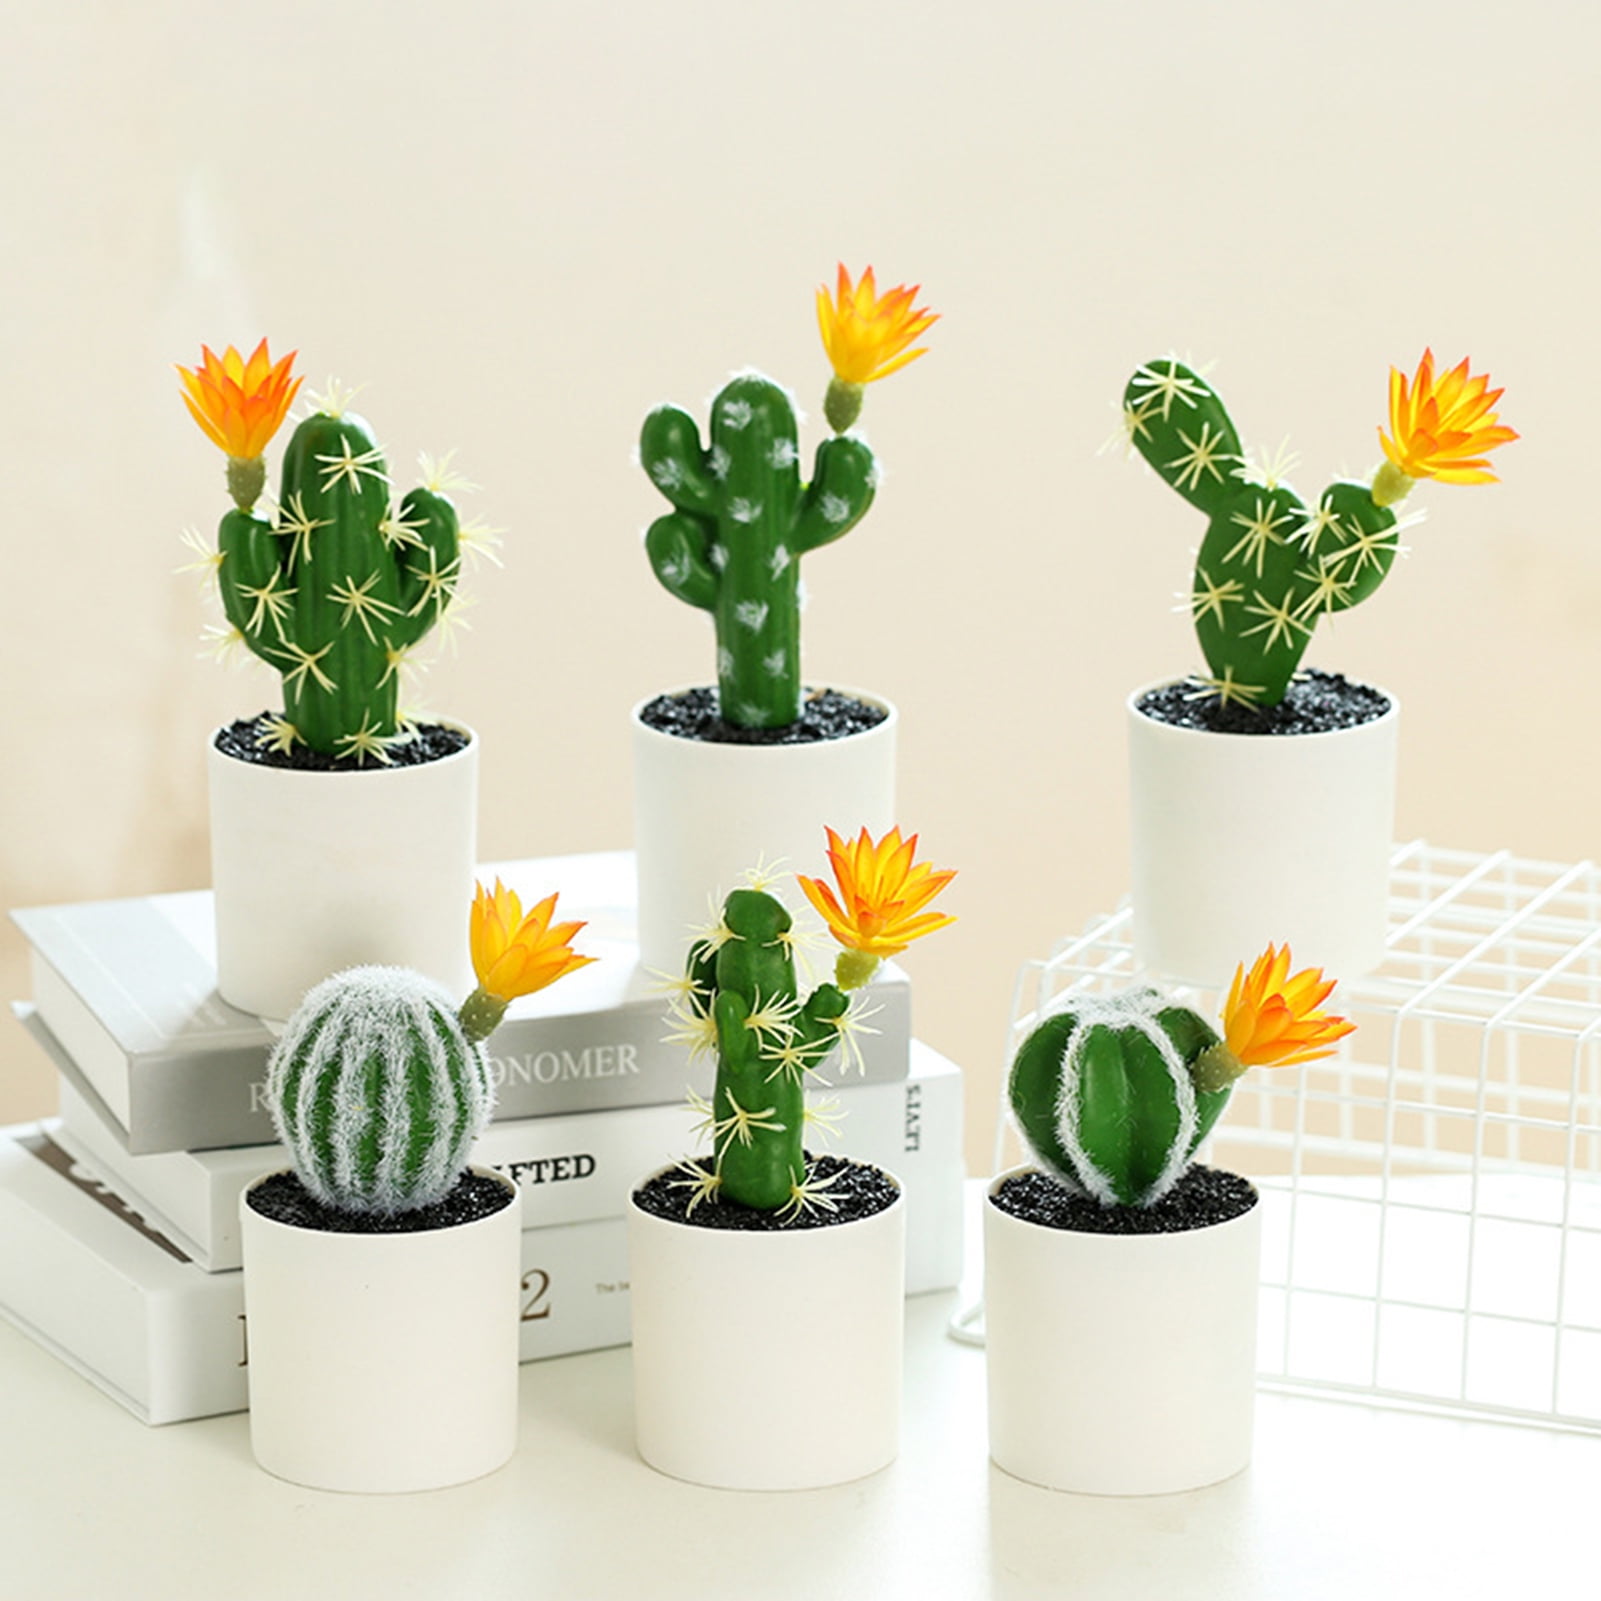 Premium Photo | Cactus plant in pots decoration on the table